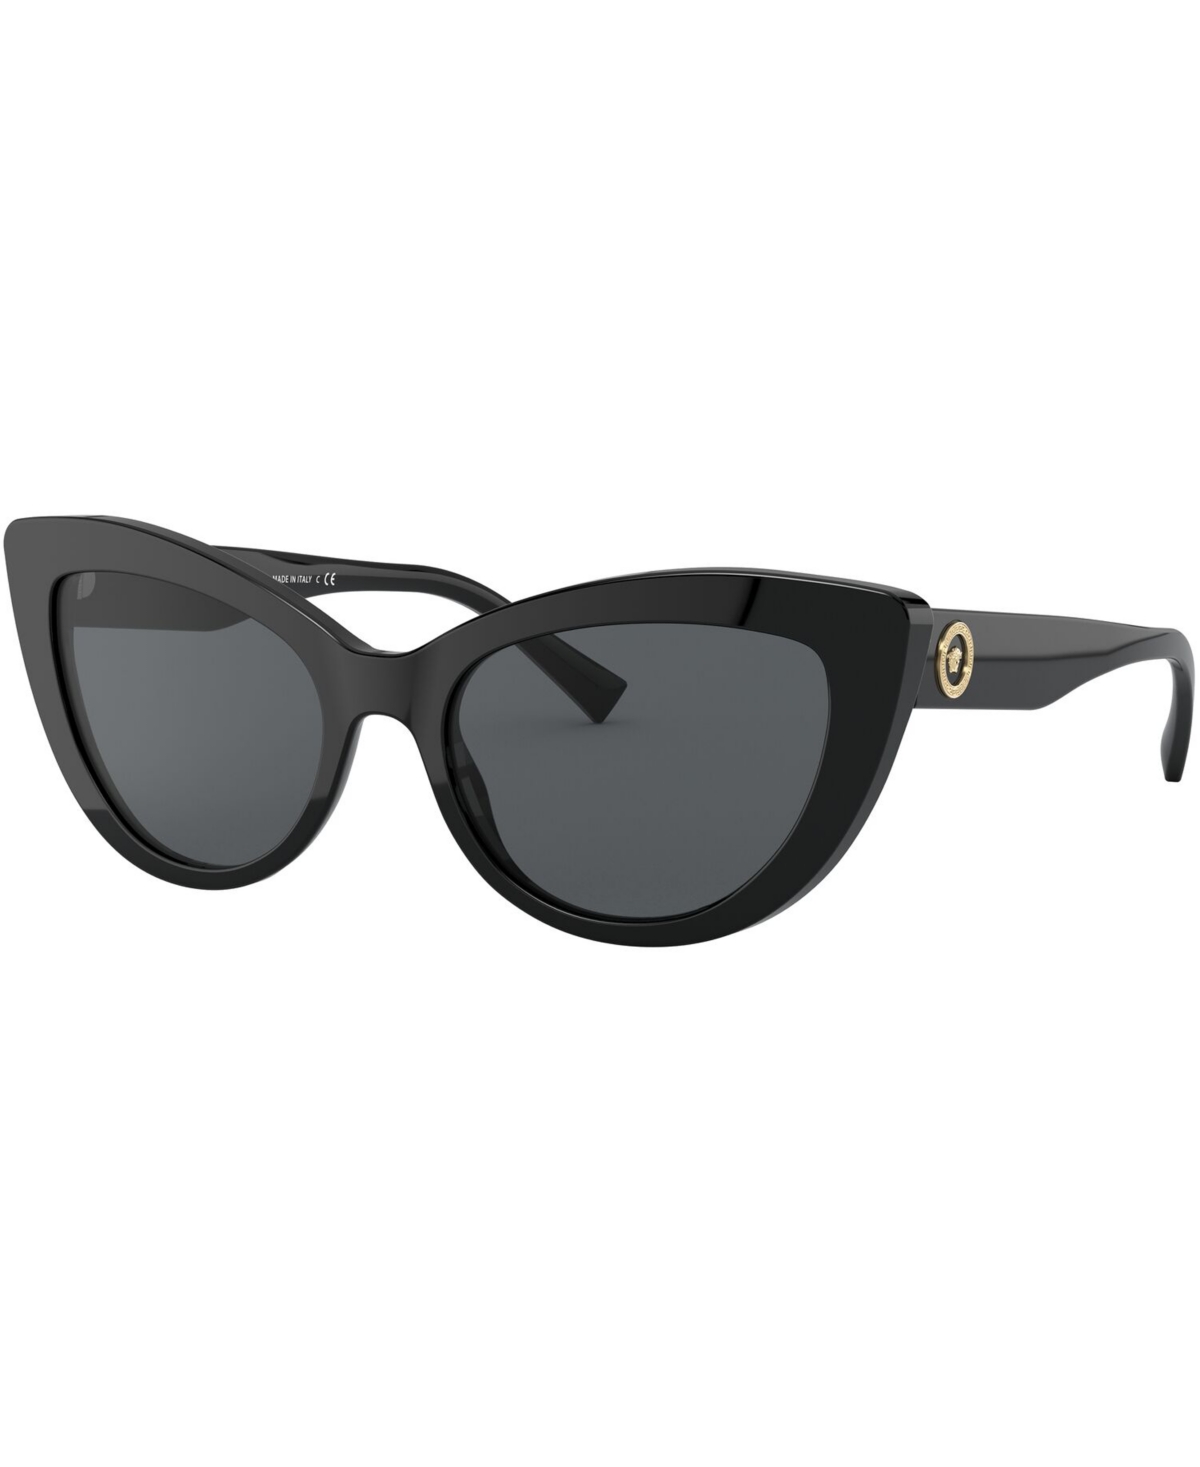 Sunglasses, VE4388 - BLACK/GREY